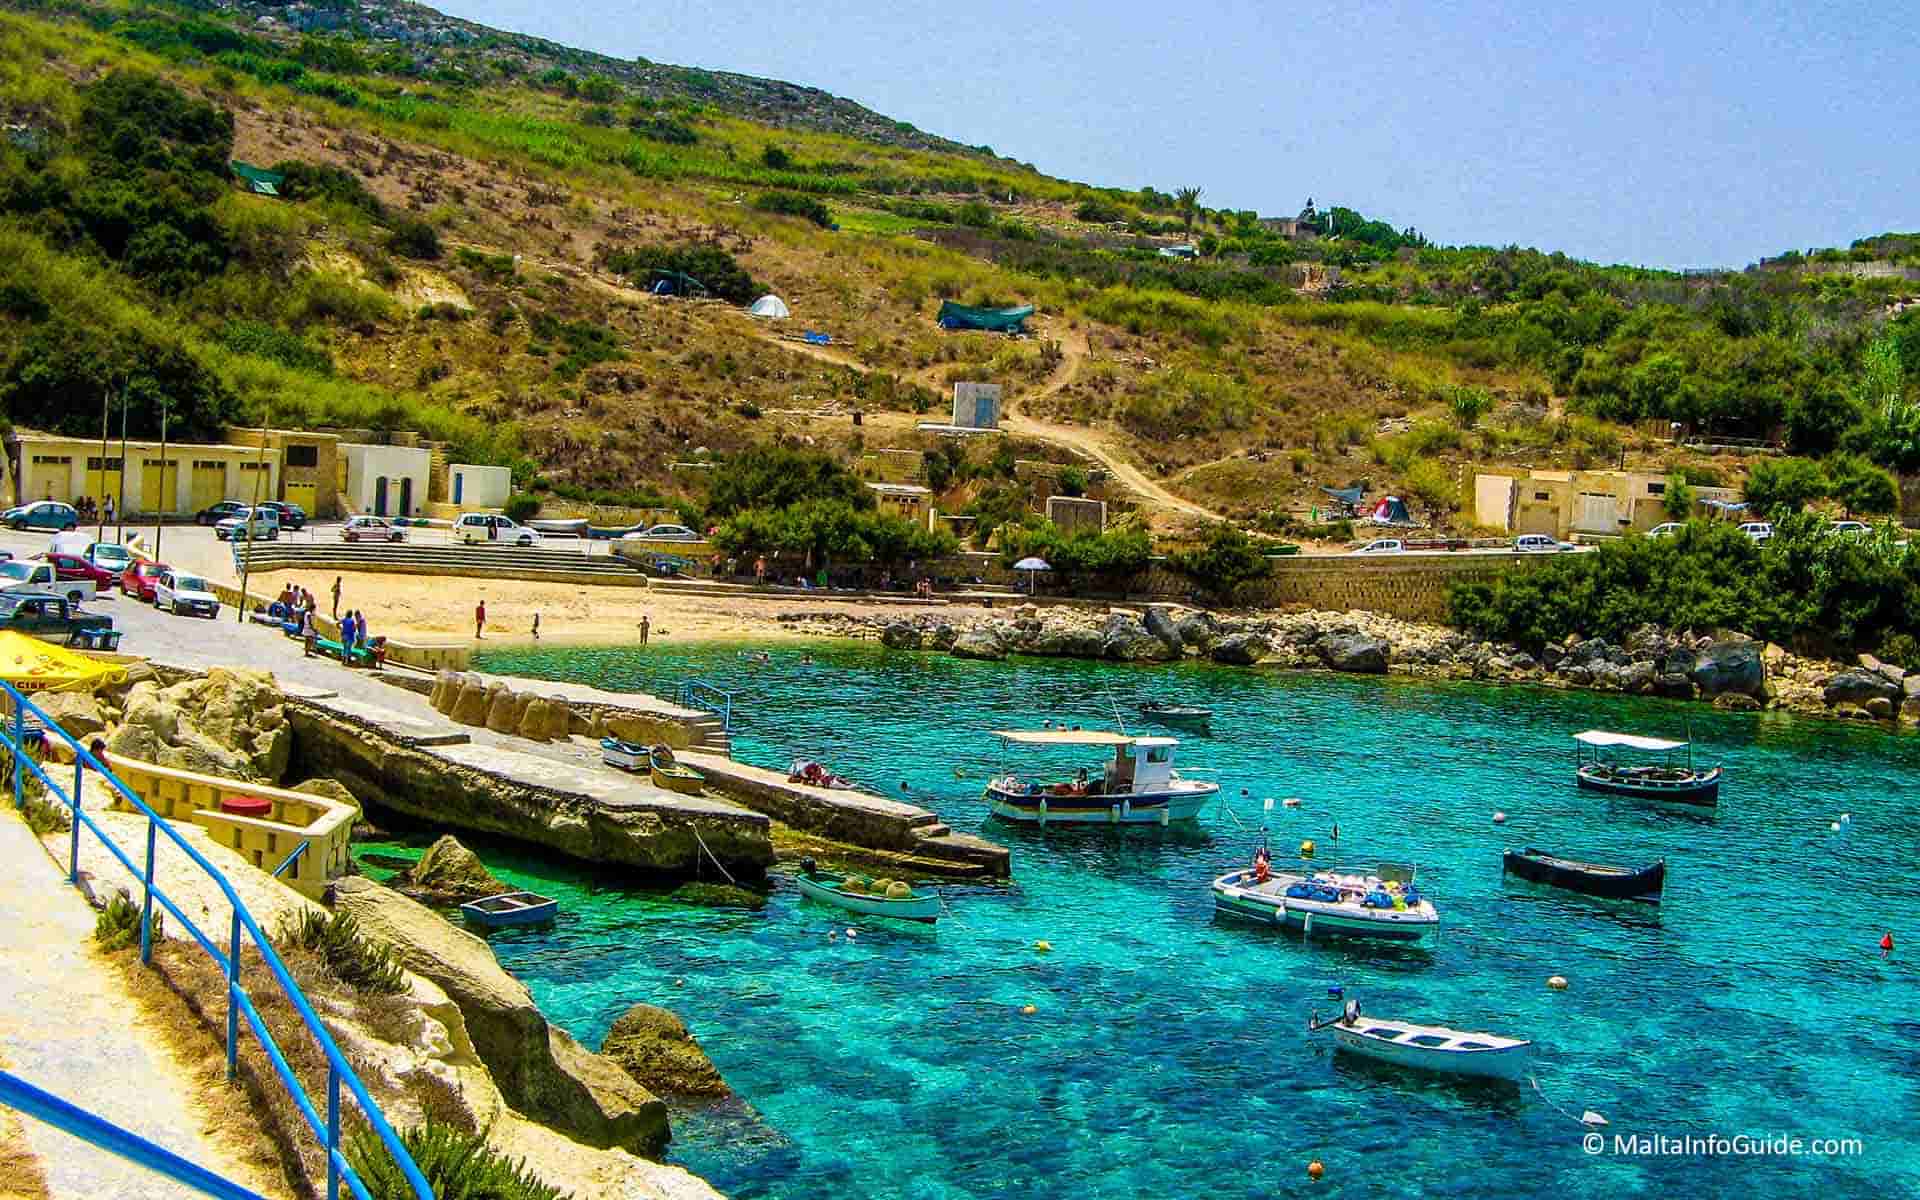 The small bay of Dahlet Qorrot Gozo